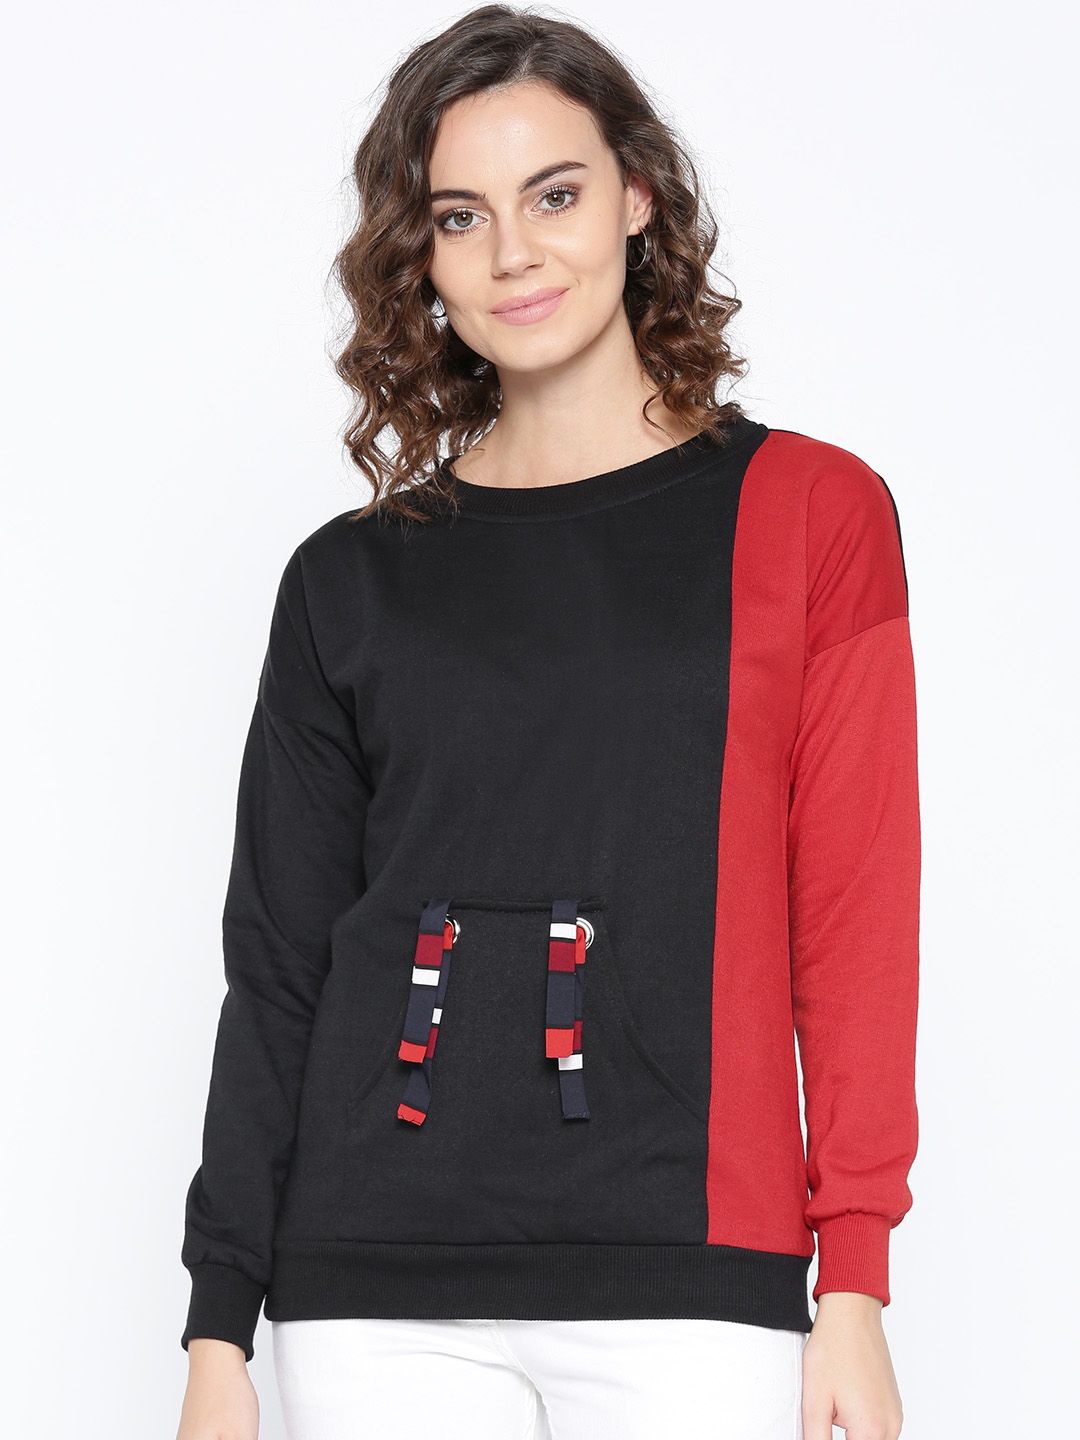 Belle Fille Women Black & Red Colourblocked Sweatshirt Price in India